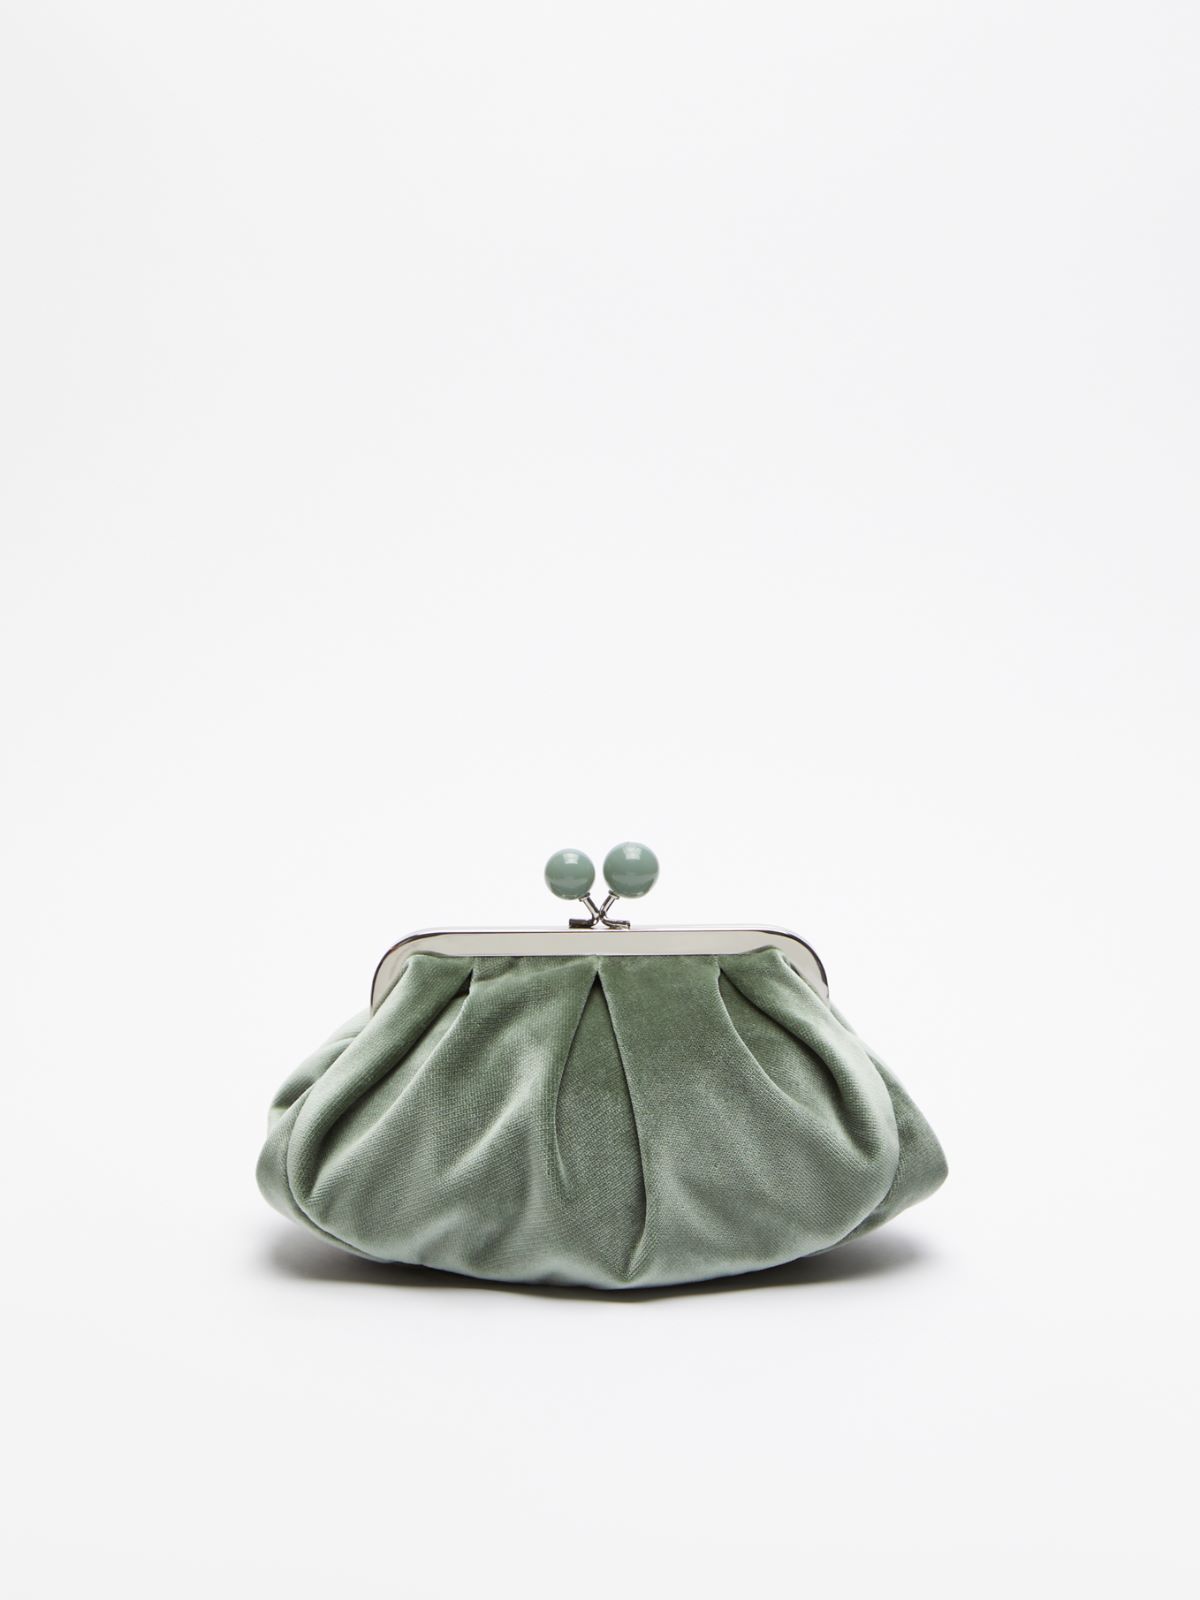 Small Pasticcino Bag in velvet  - SAGE GREEN - Weekend Max Mara - 3